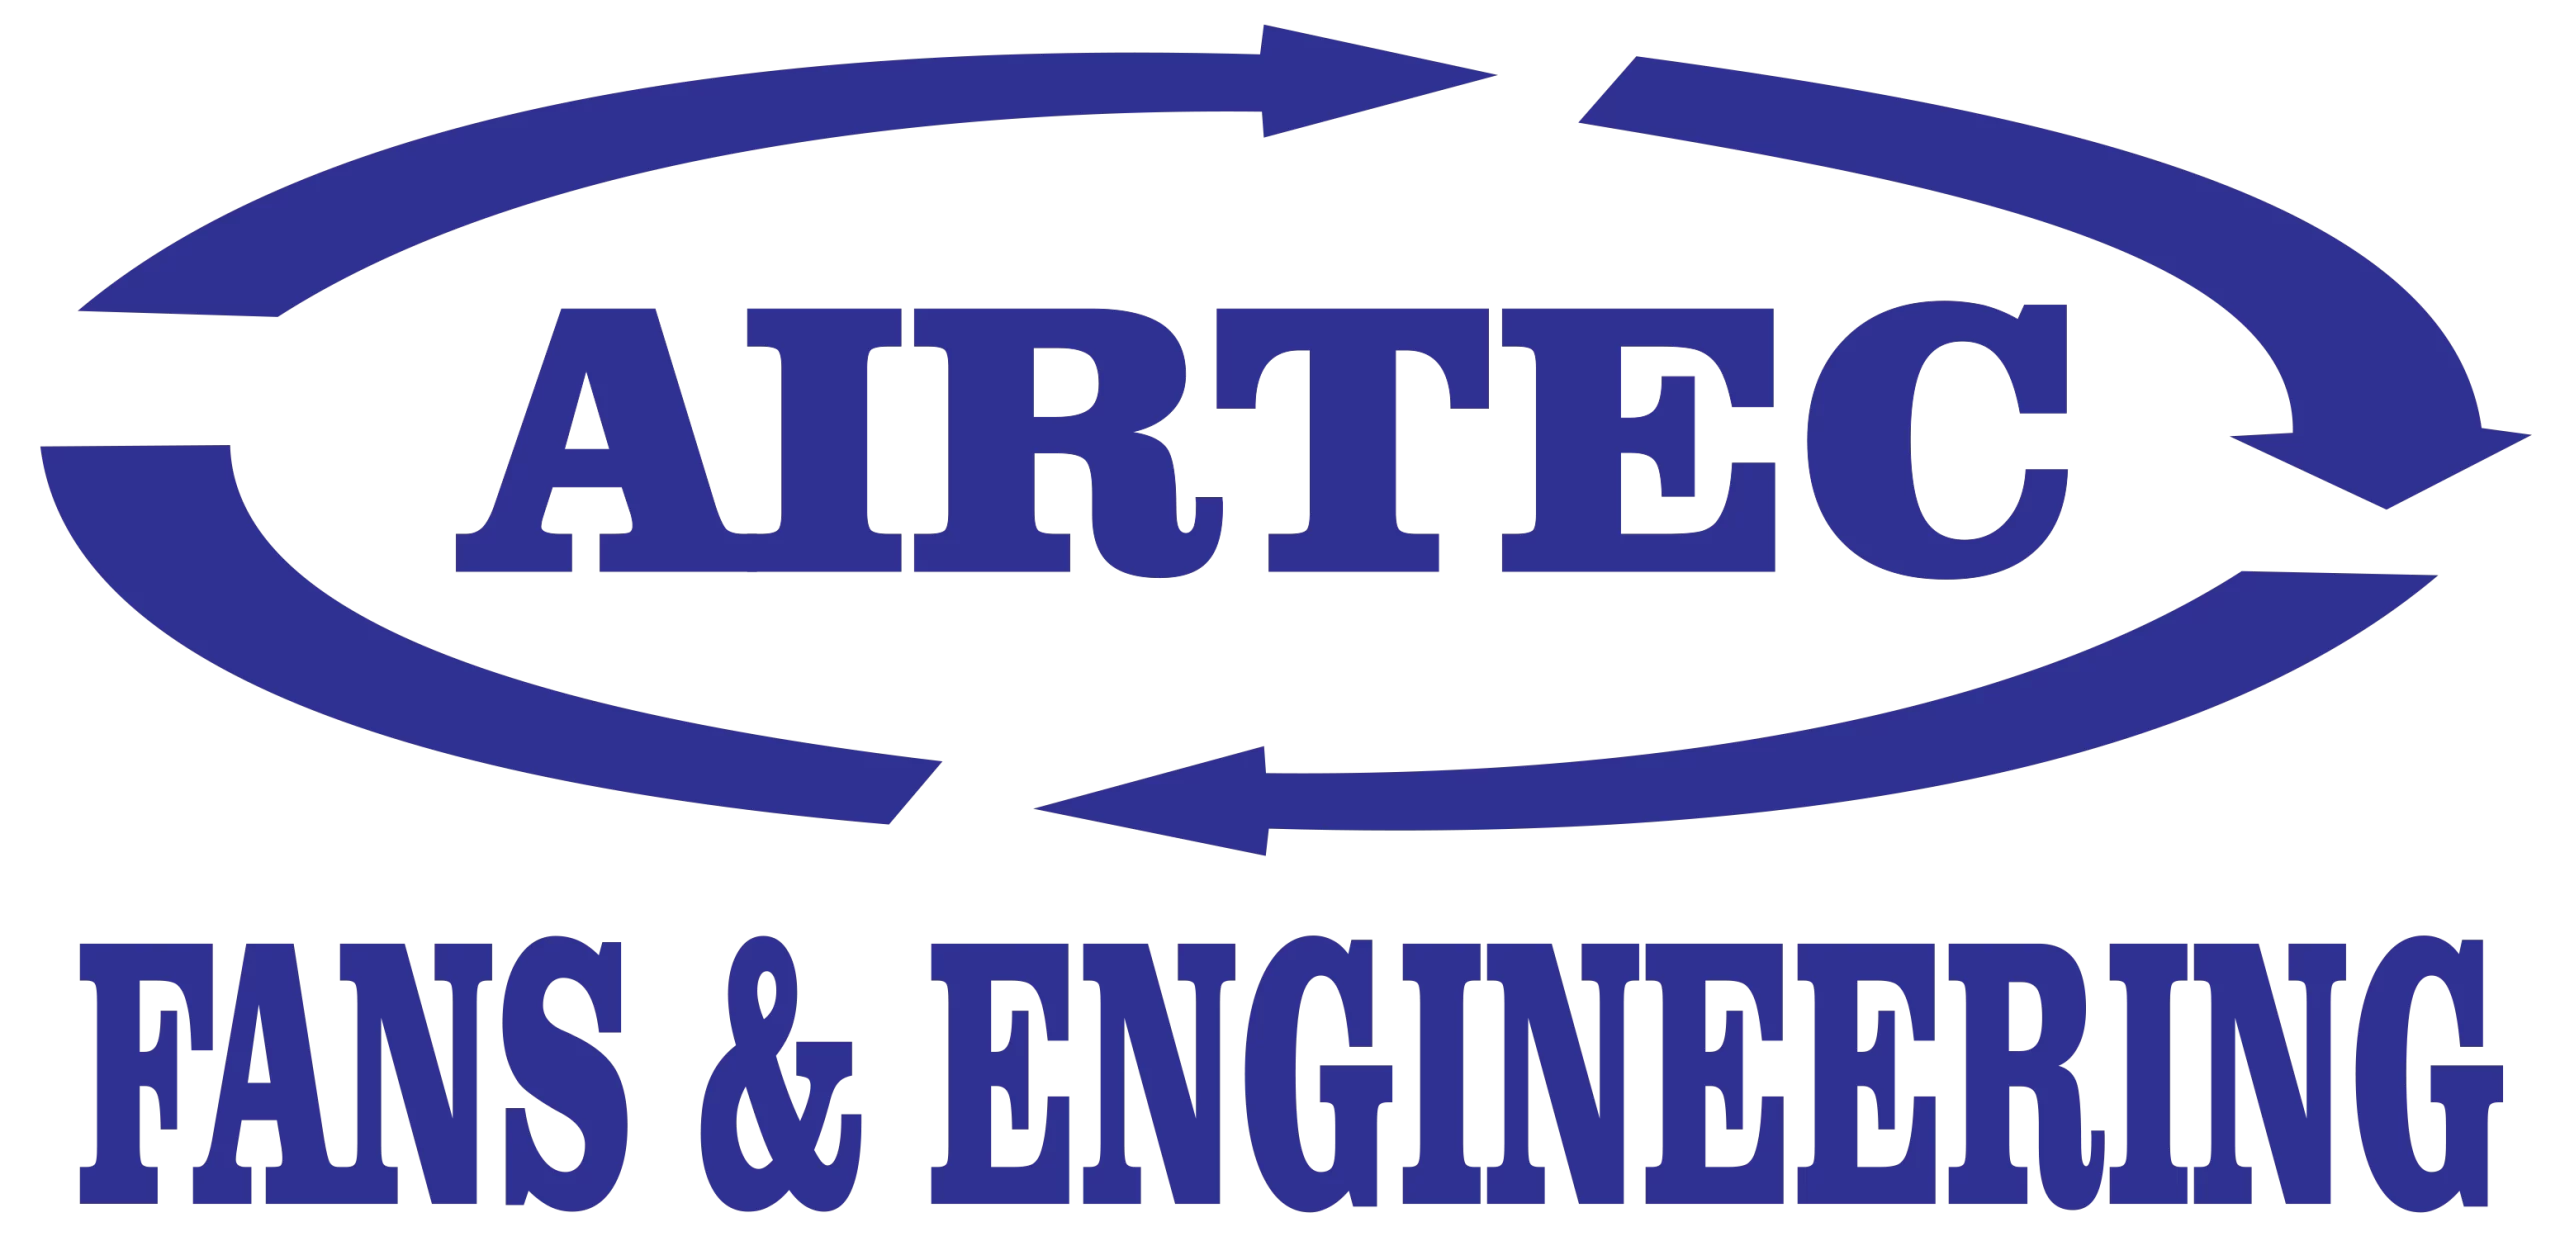 Airtec Fans & Engineering